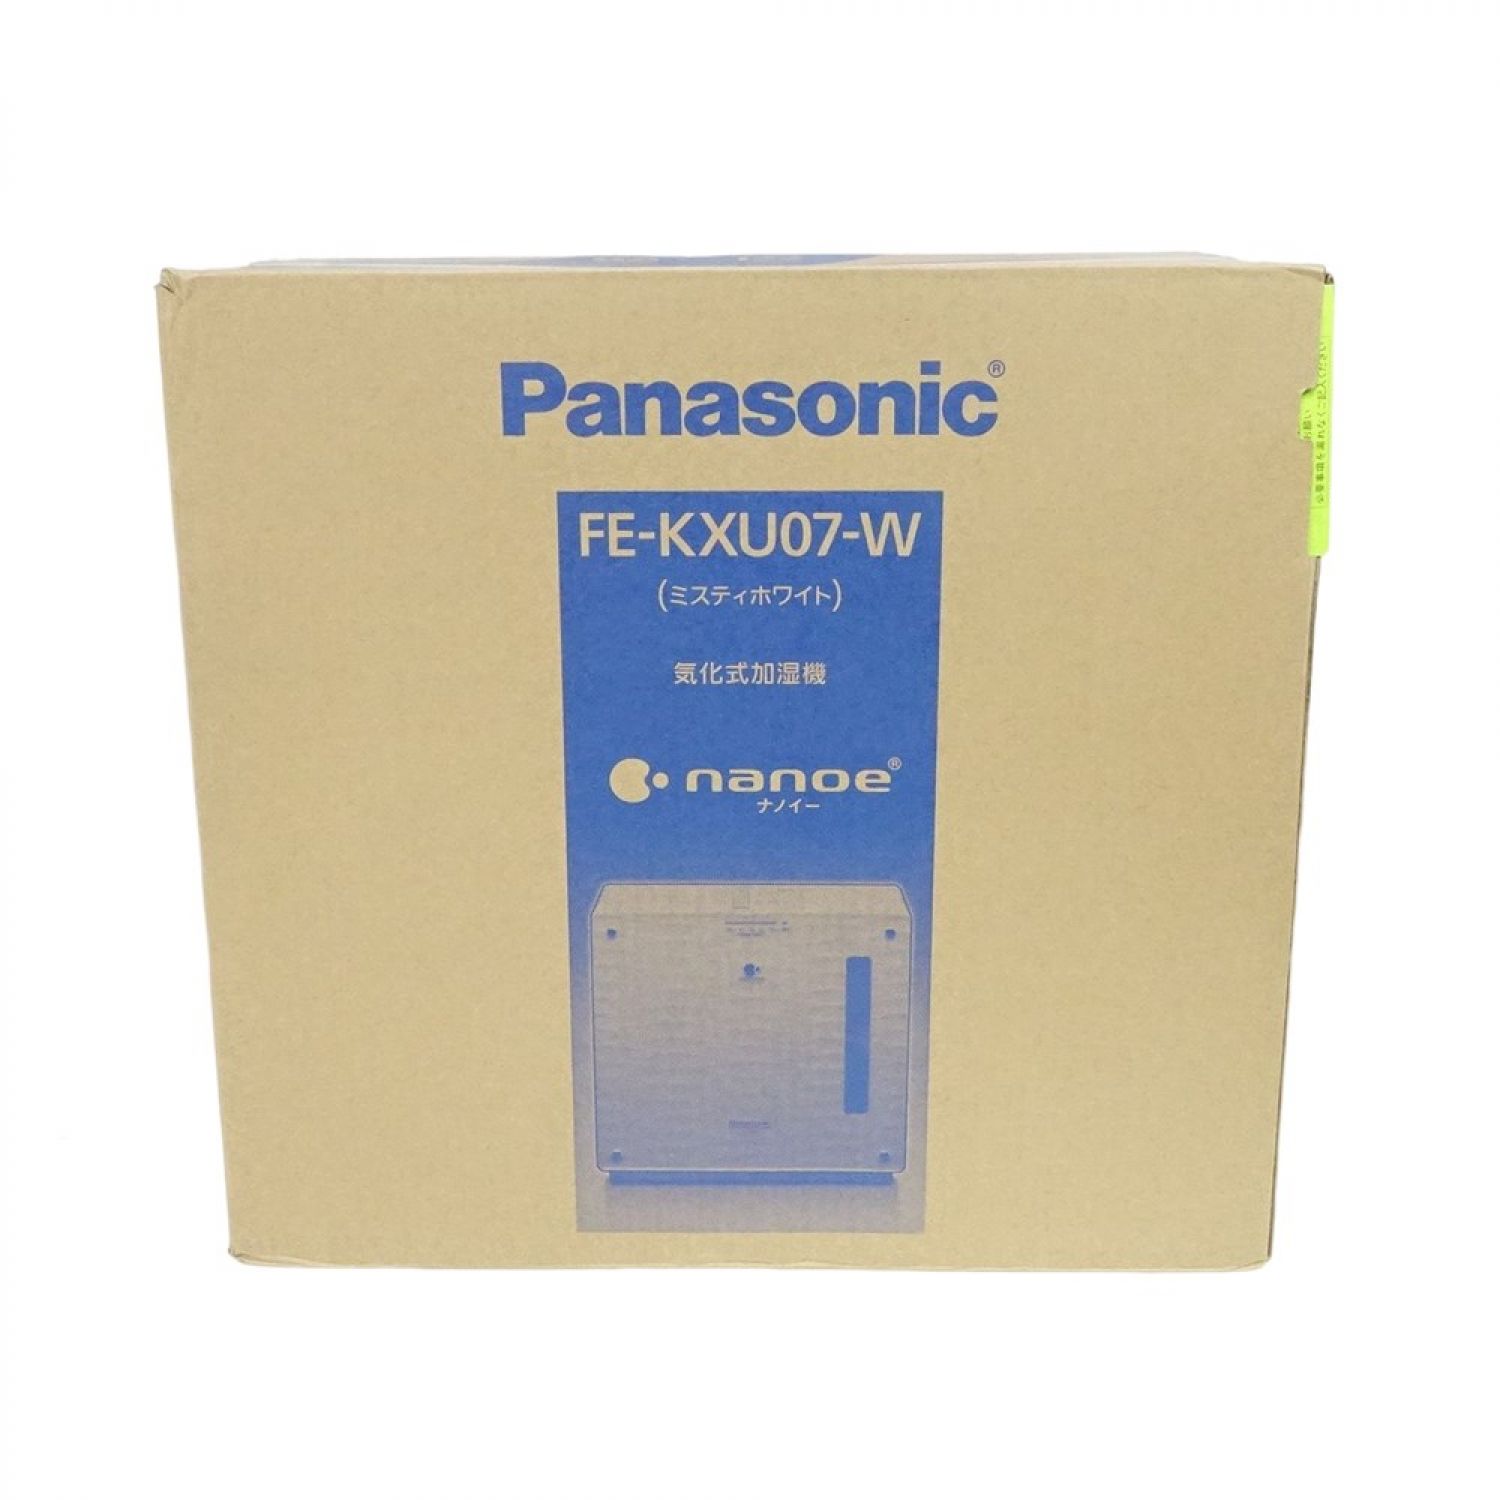 Panasonic FE-KXU07-W WHITE - 加湿器